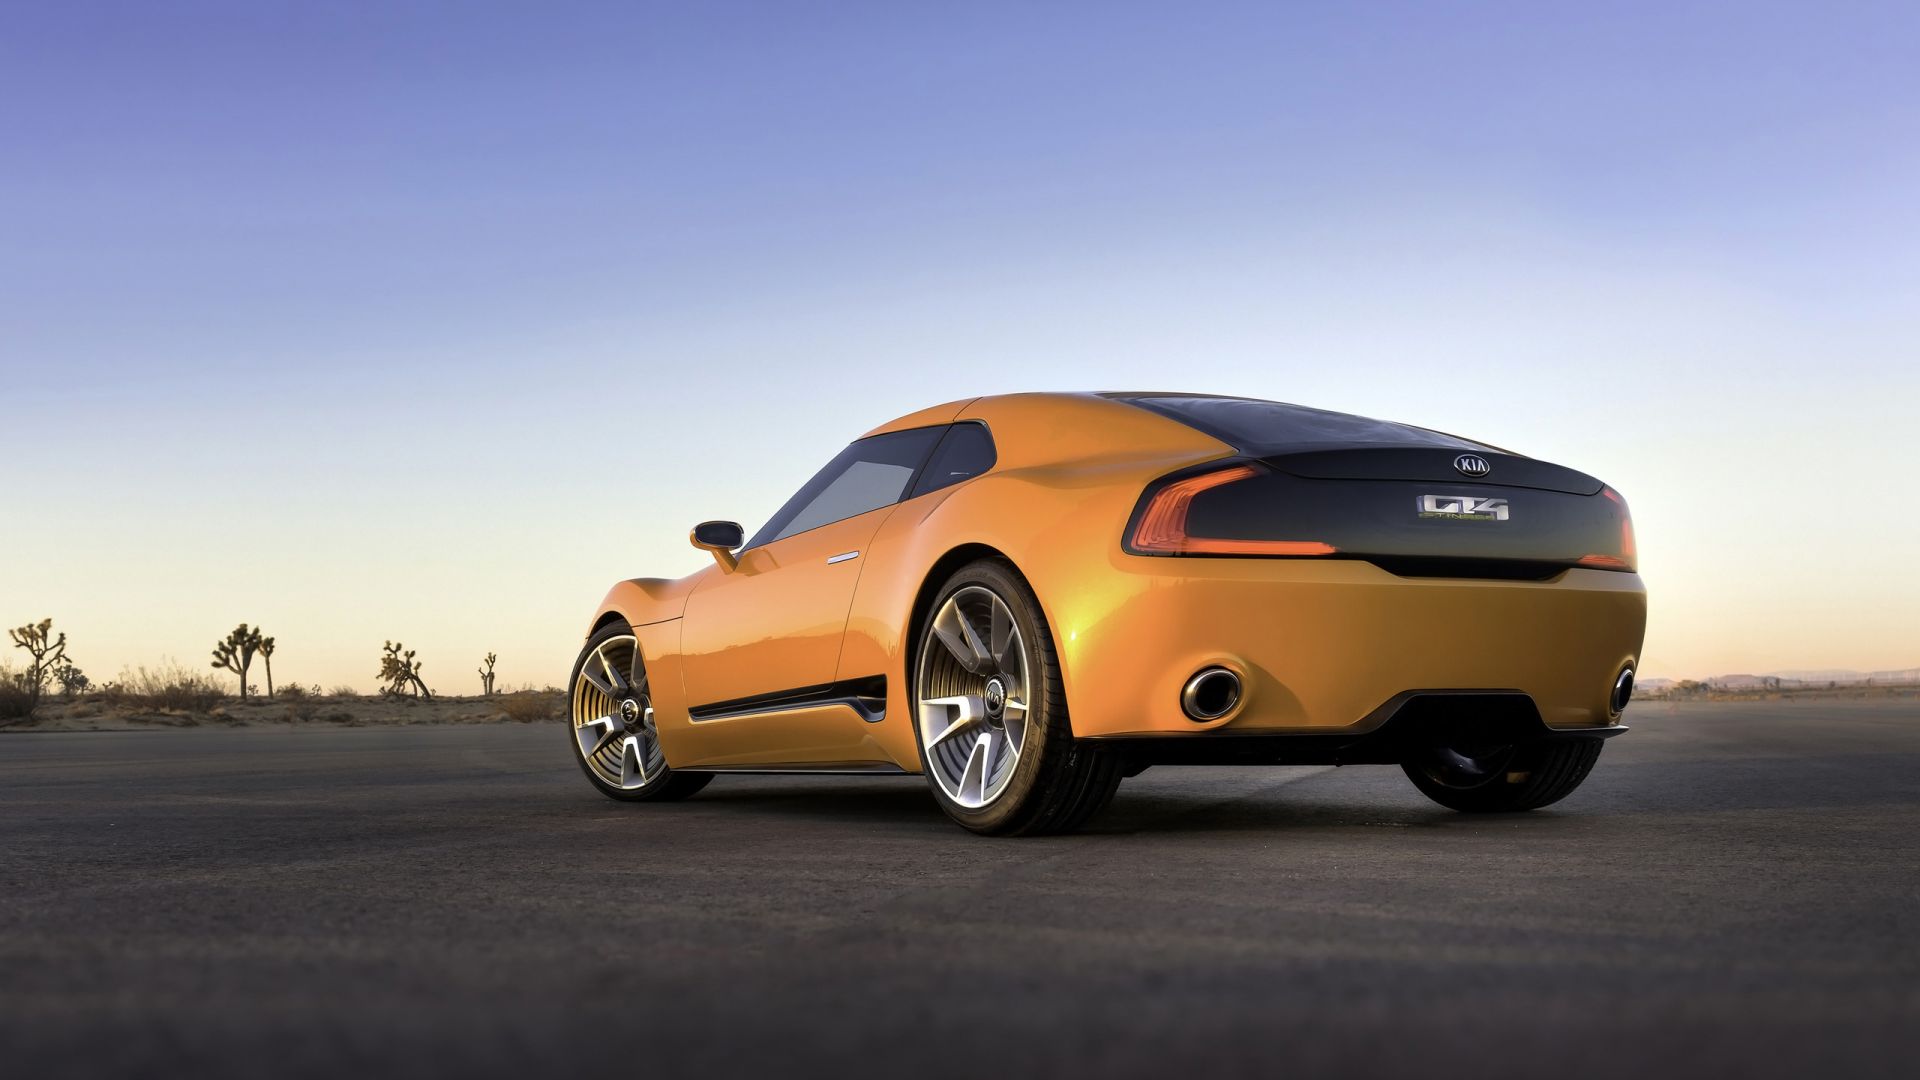 Desktop Wallpaper 2018 Kia Stinger Orange Sports Car, Hd Image, Picture,  Background, Wdkcmp